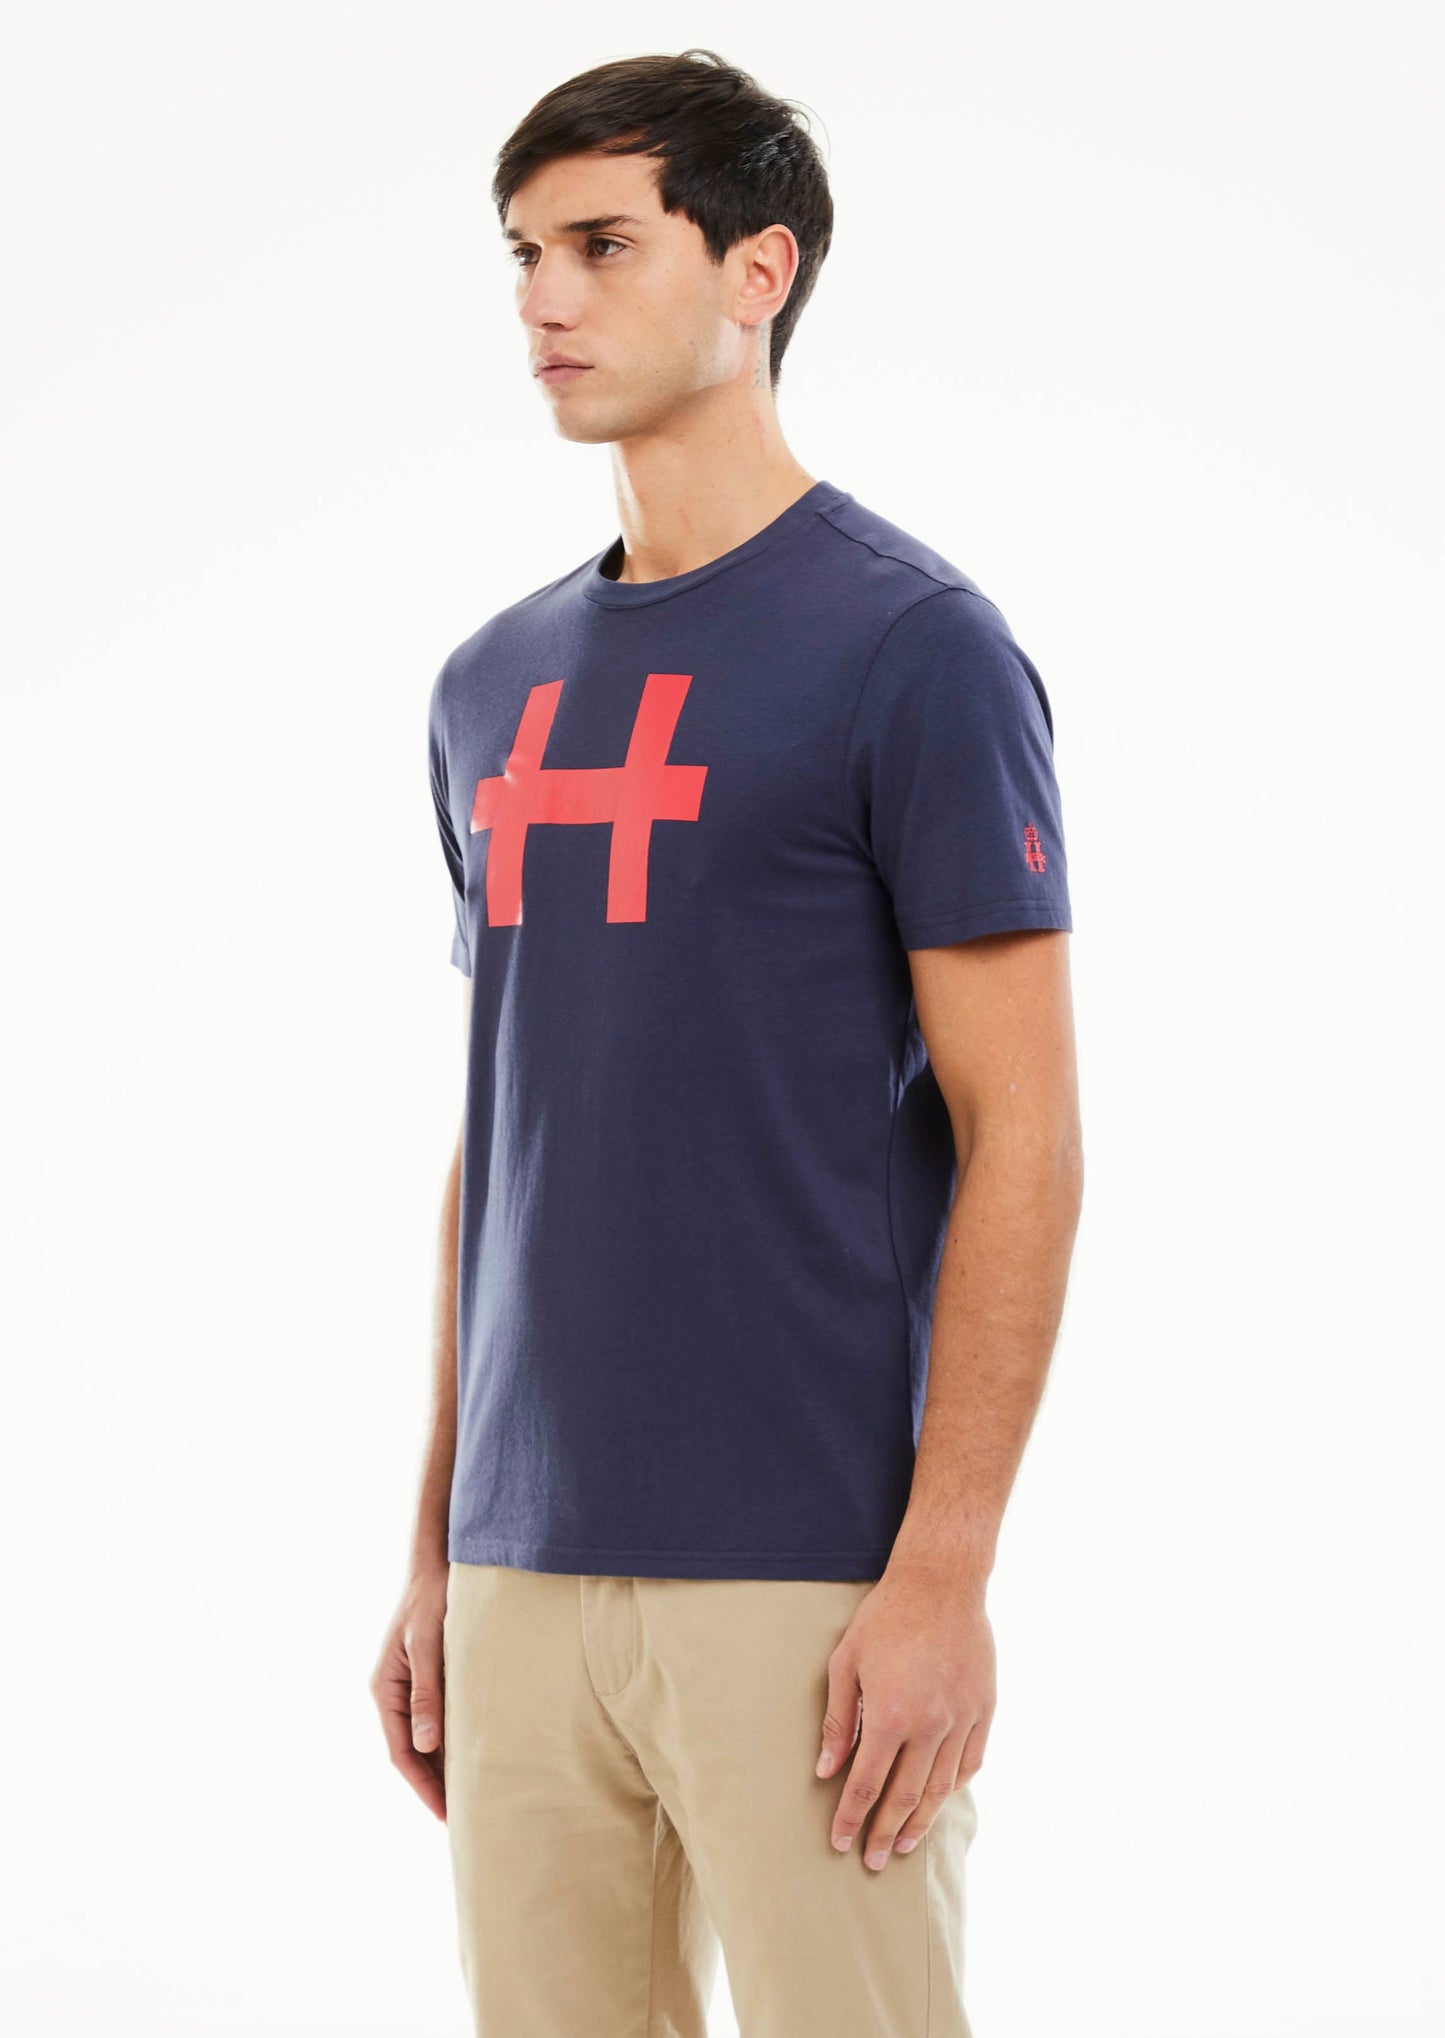 H Graphic T-Shirt - Navy